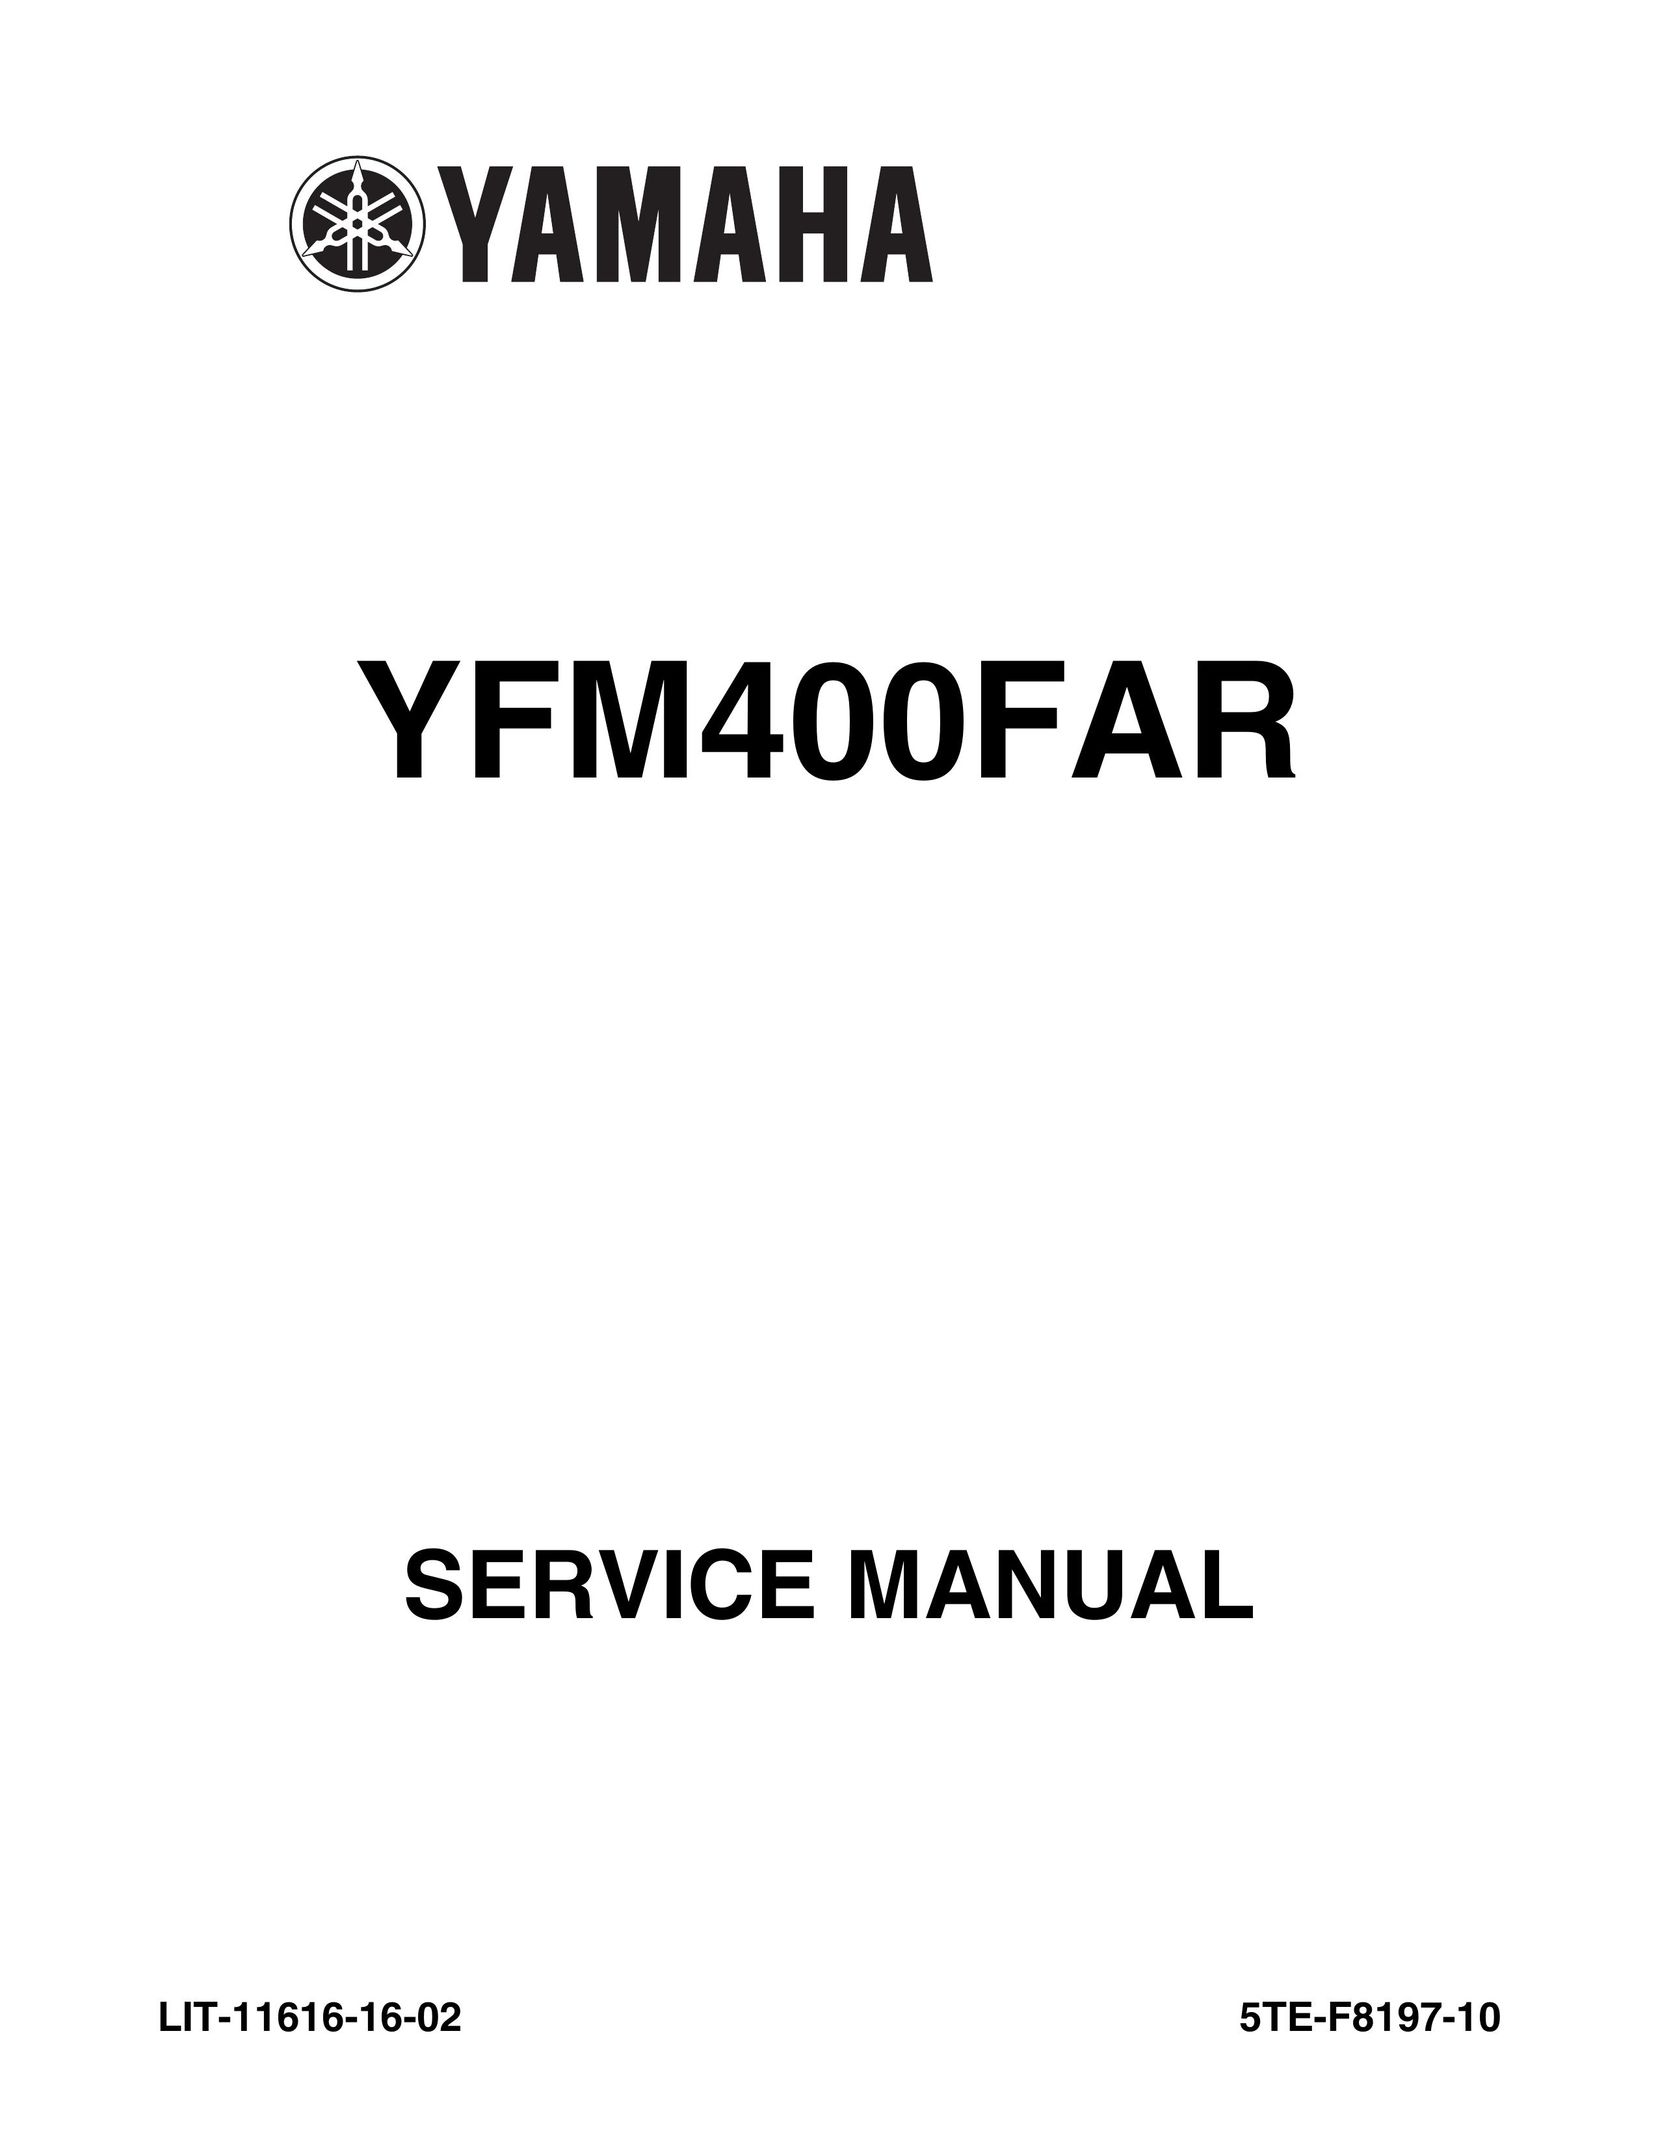 Yamaha LIT-11616-16-02 Model Vehicle User Manual